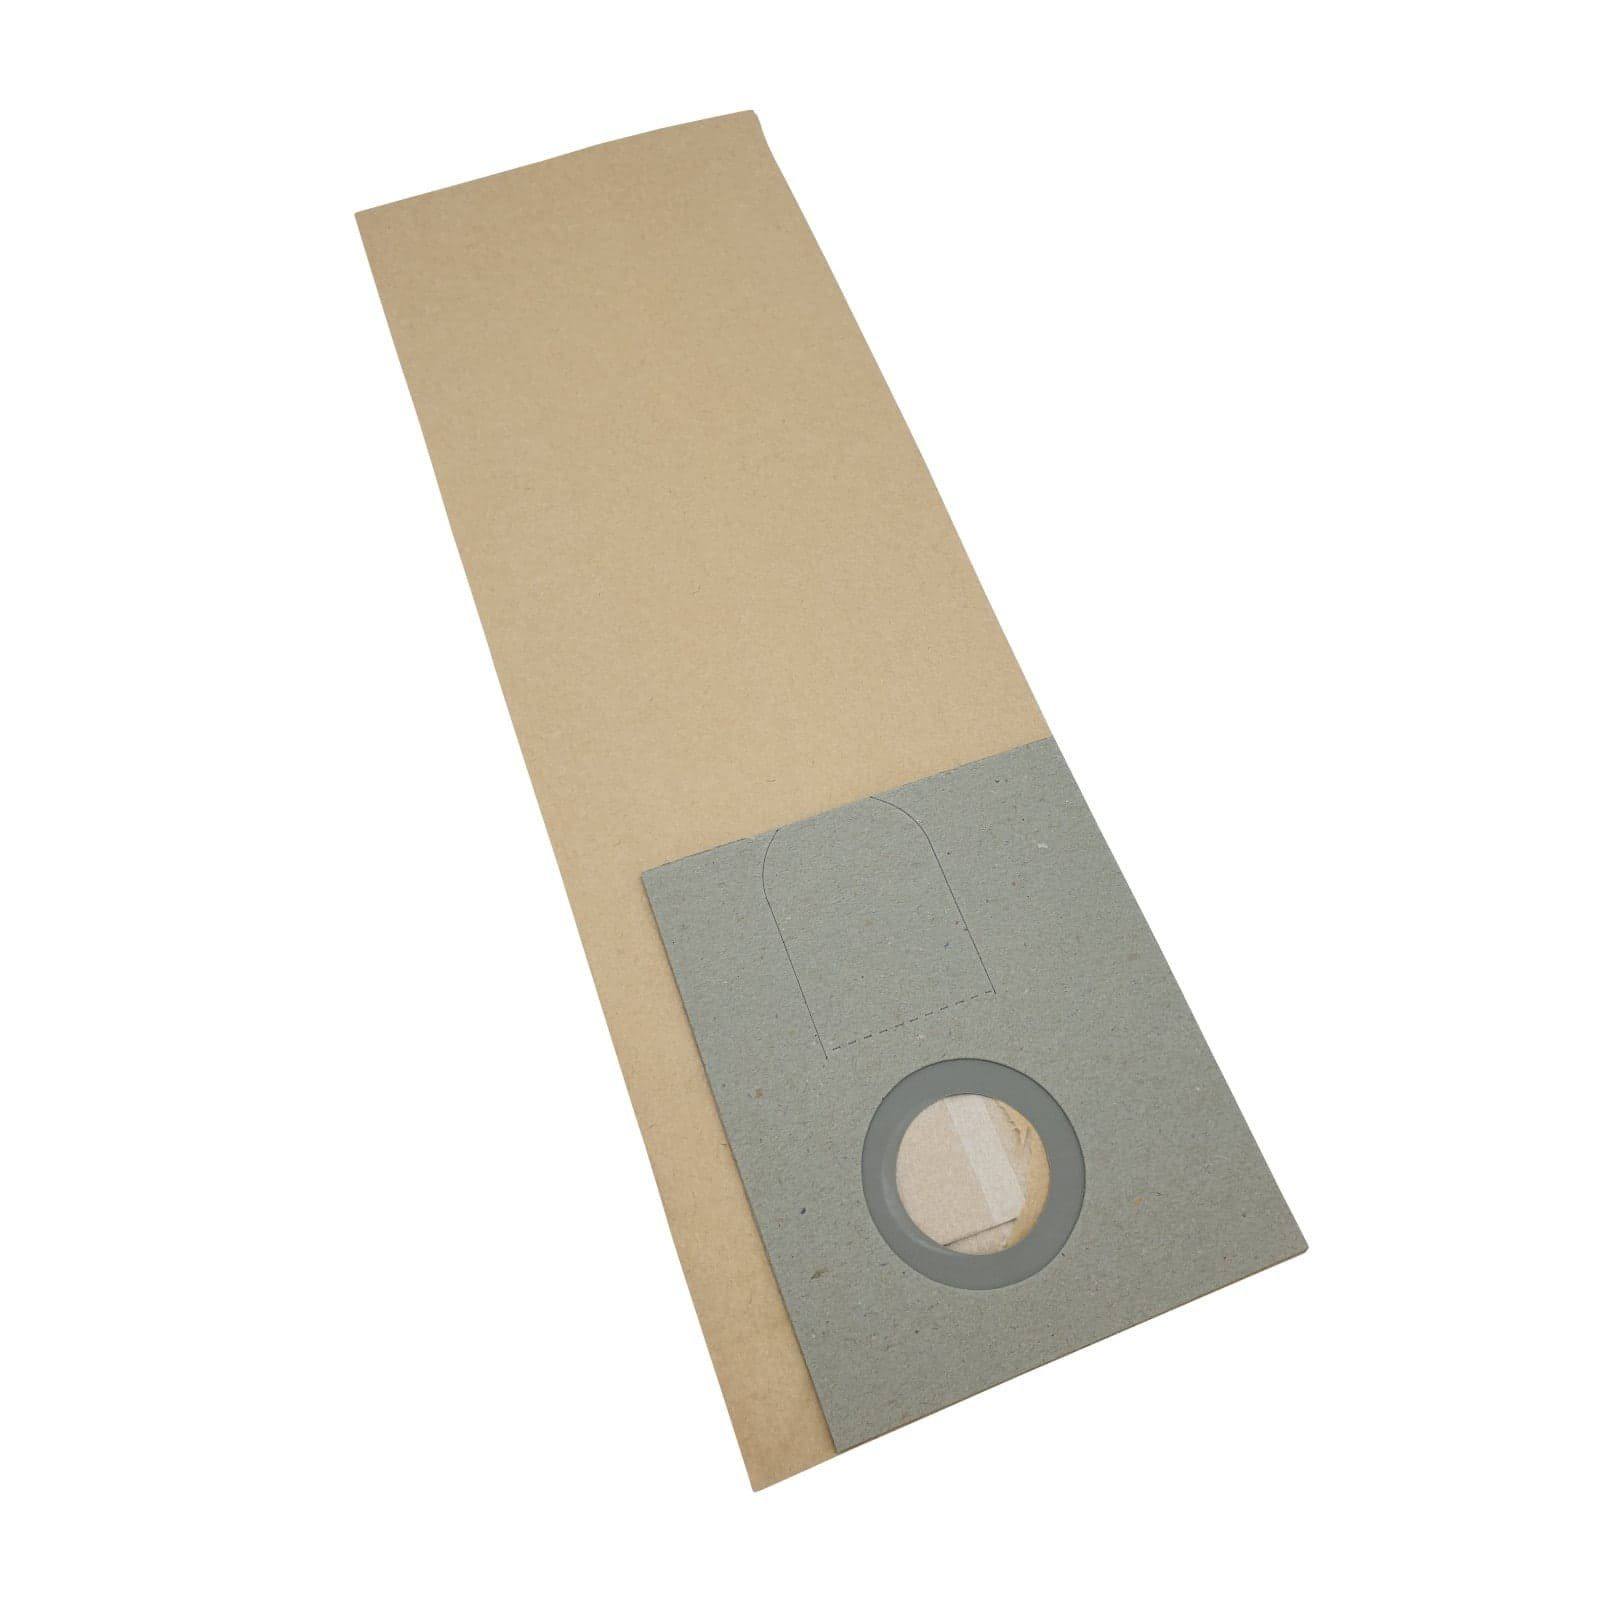 Reinica Staubsaugerbeutel passend für Clean a la Card Compacto UP350, 10er-Pack Staubbeutel Saugerbeutel Beutel Filtertüten